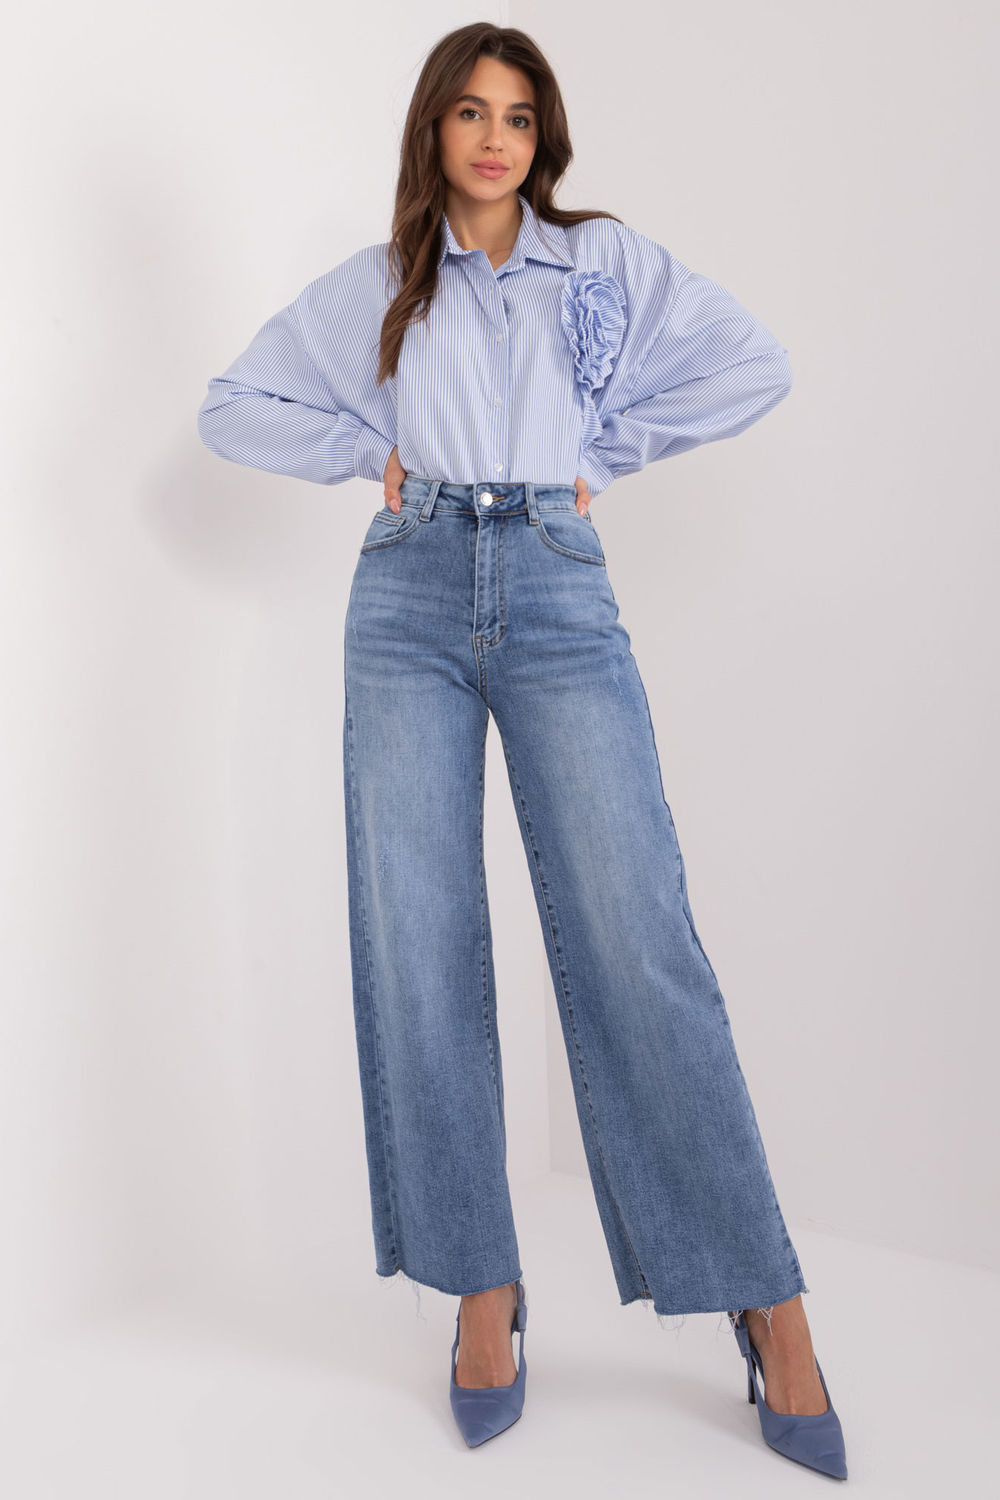 Jeans model 193152 NM